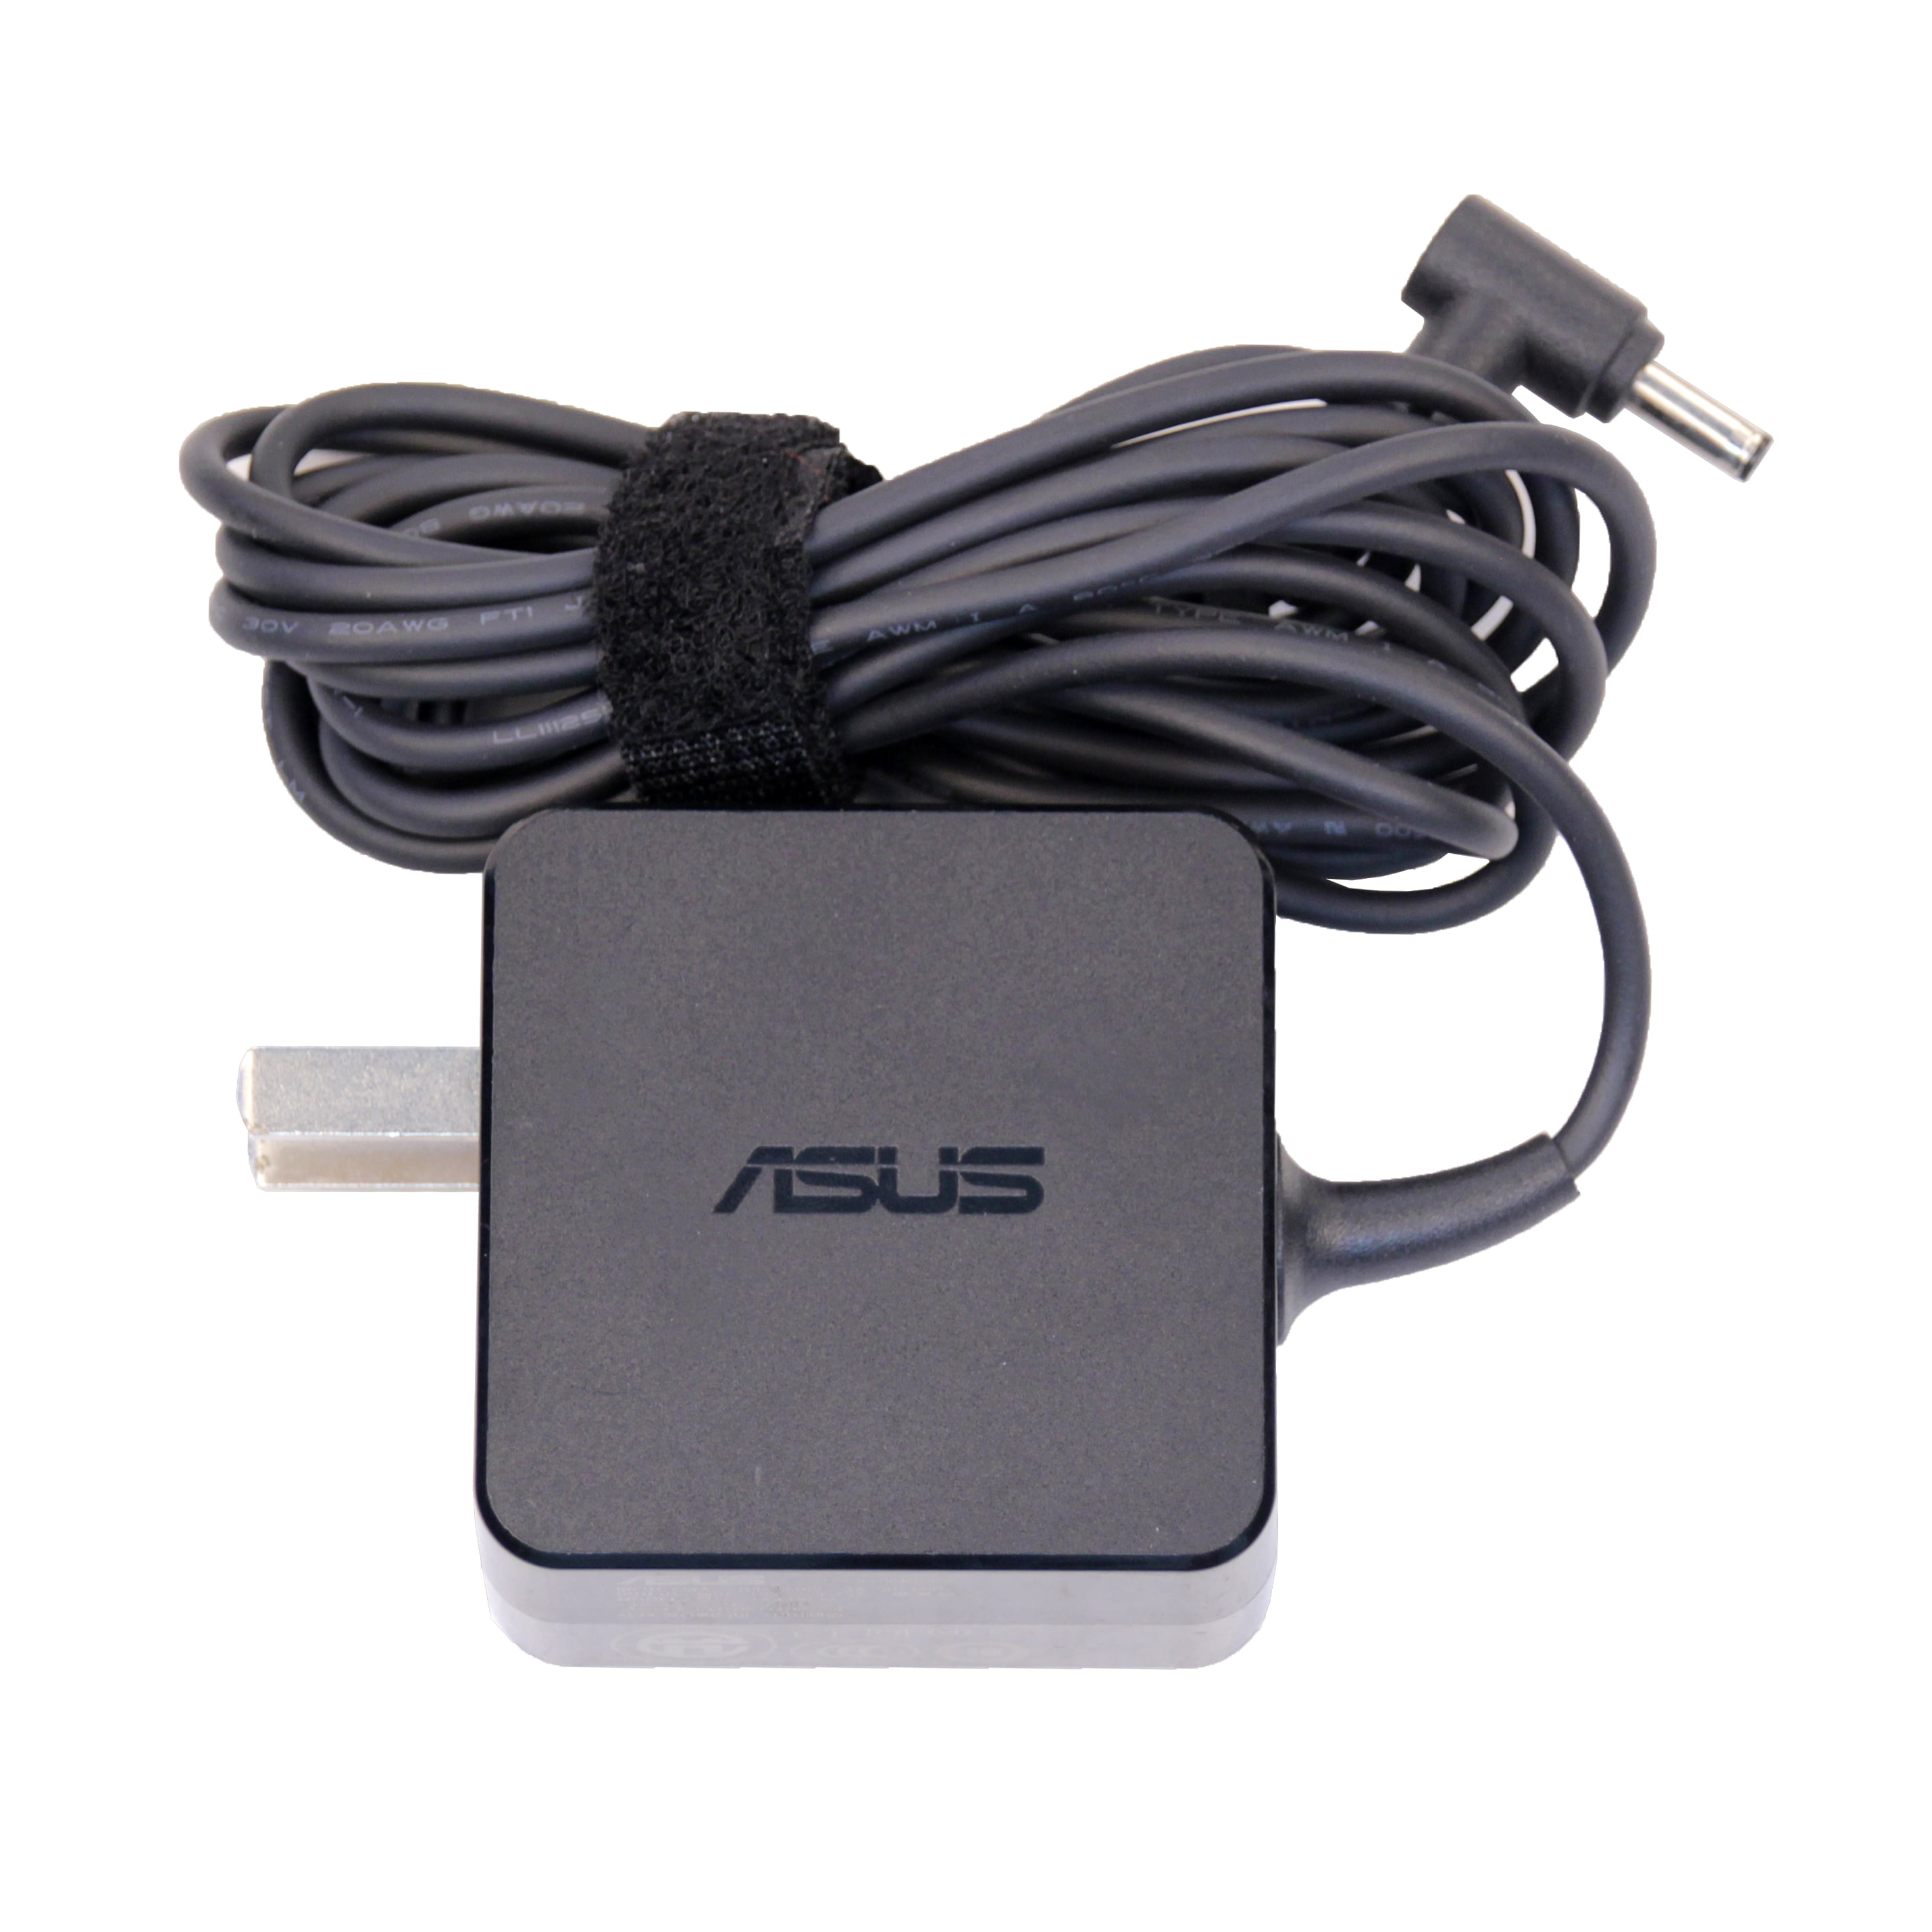 Asus X750L 19V Laptop Ladegerät / 33W Laptop Netzteil - Ac Adapter